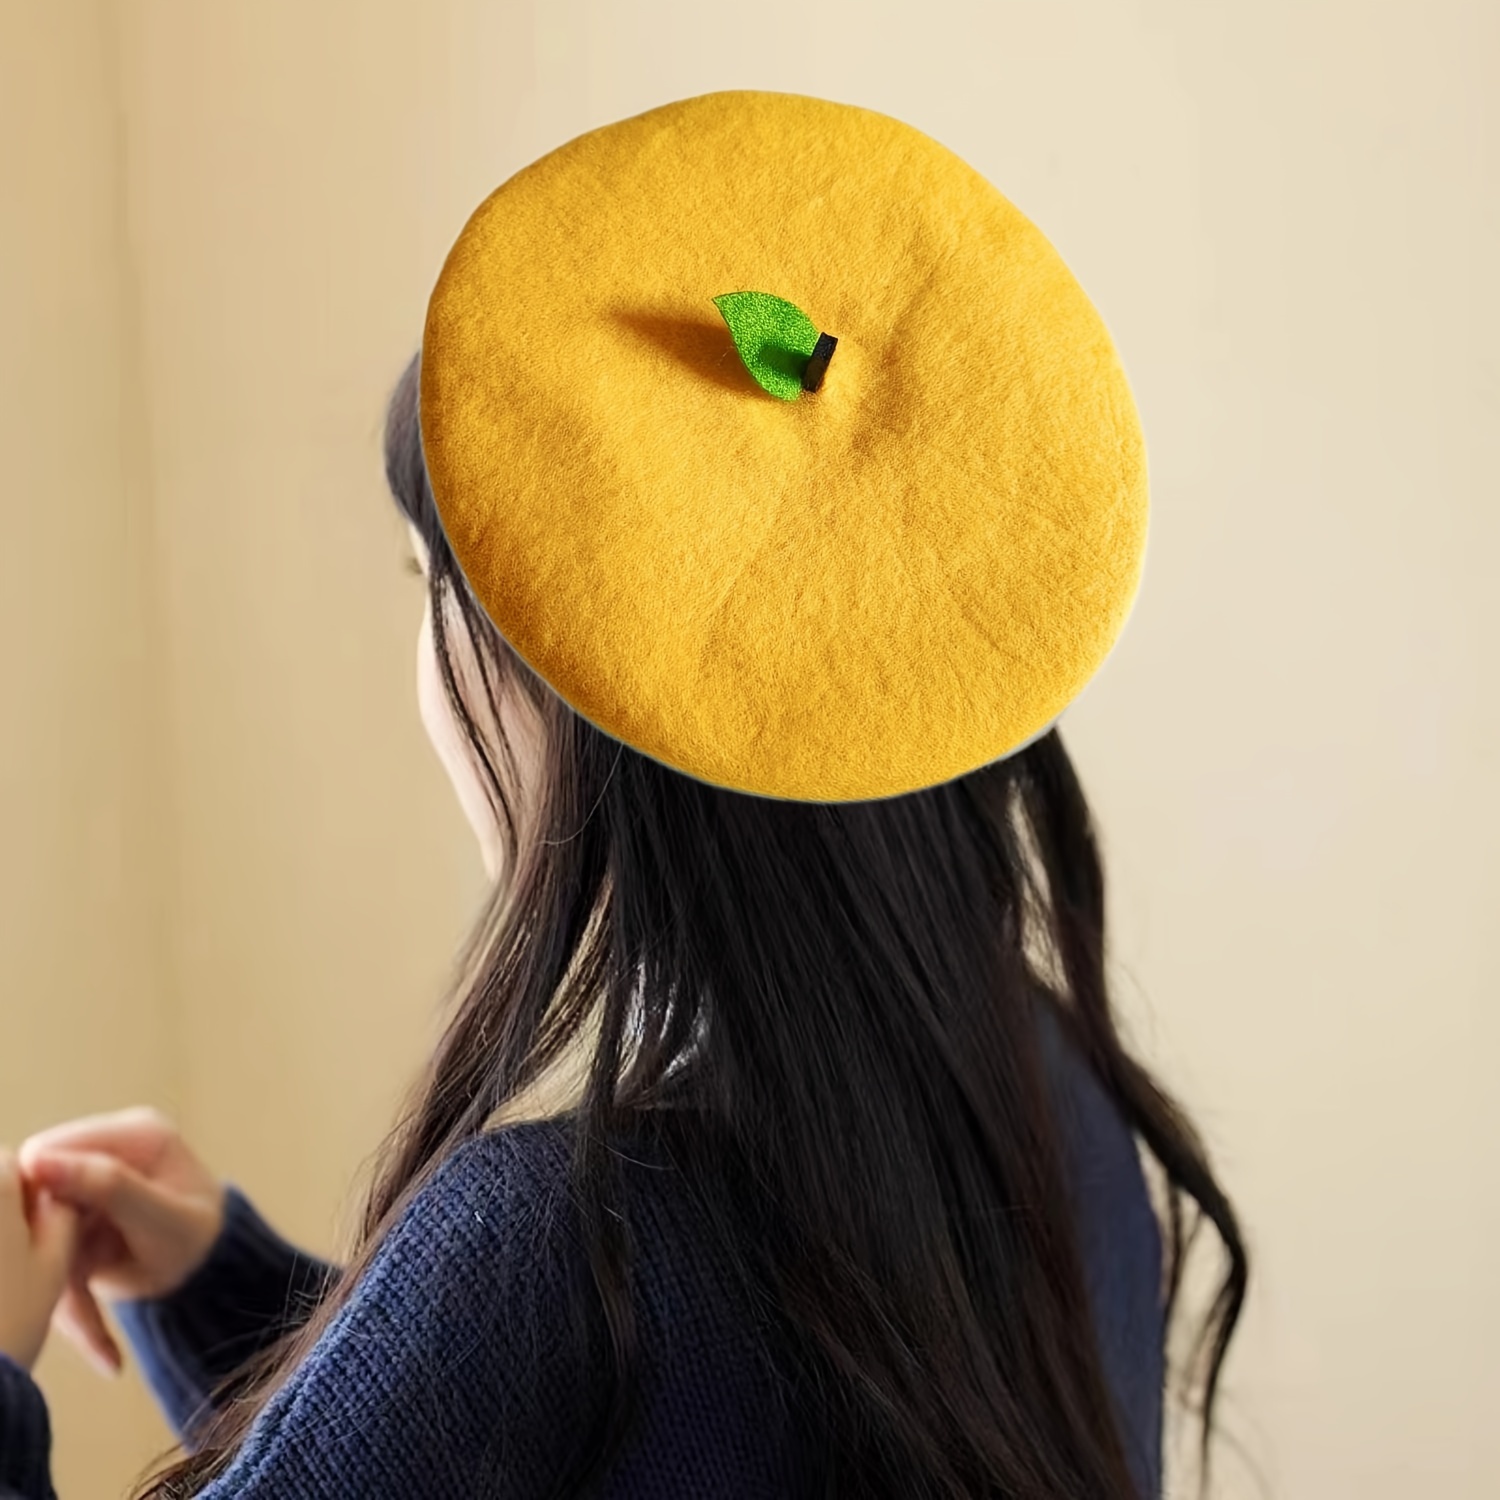 fruit candy color beret elegant lightweight beret cap cute painter hats for women